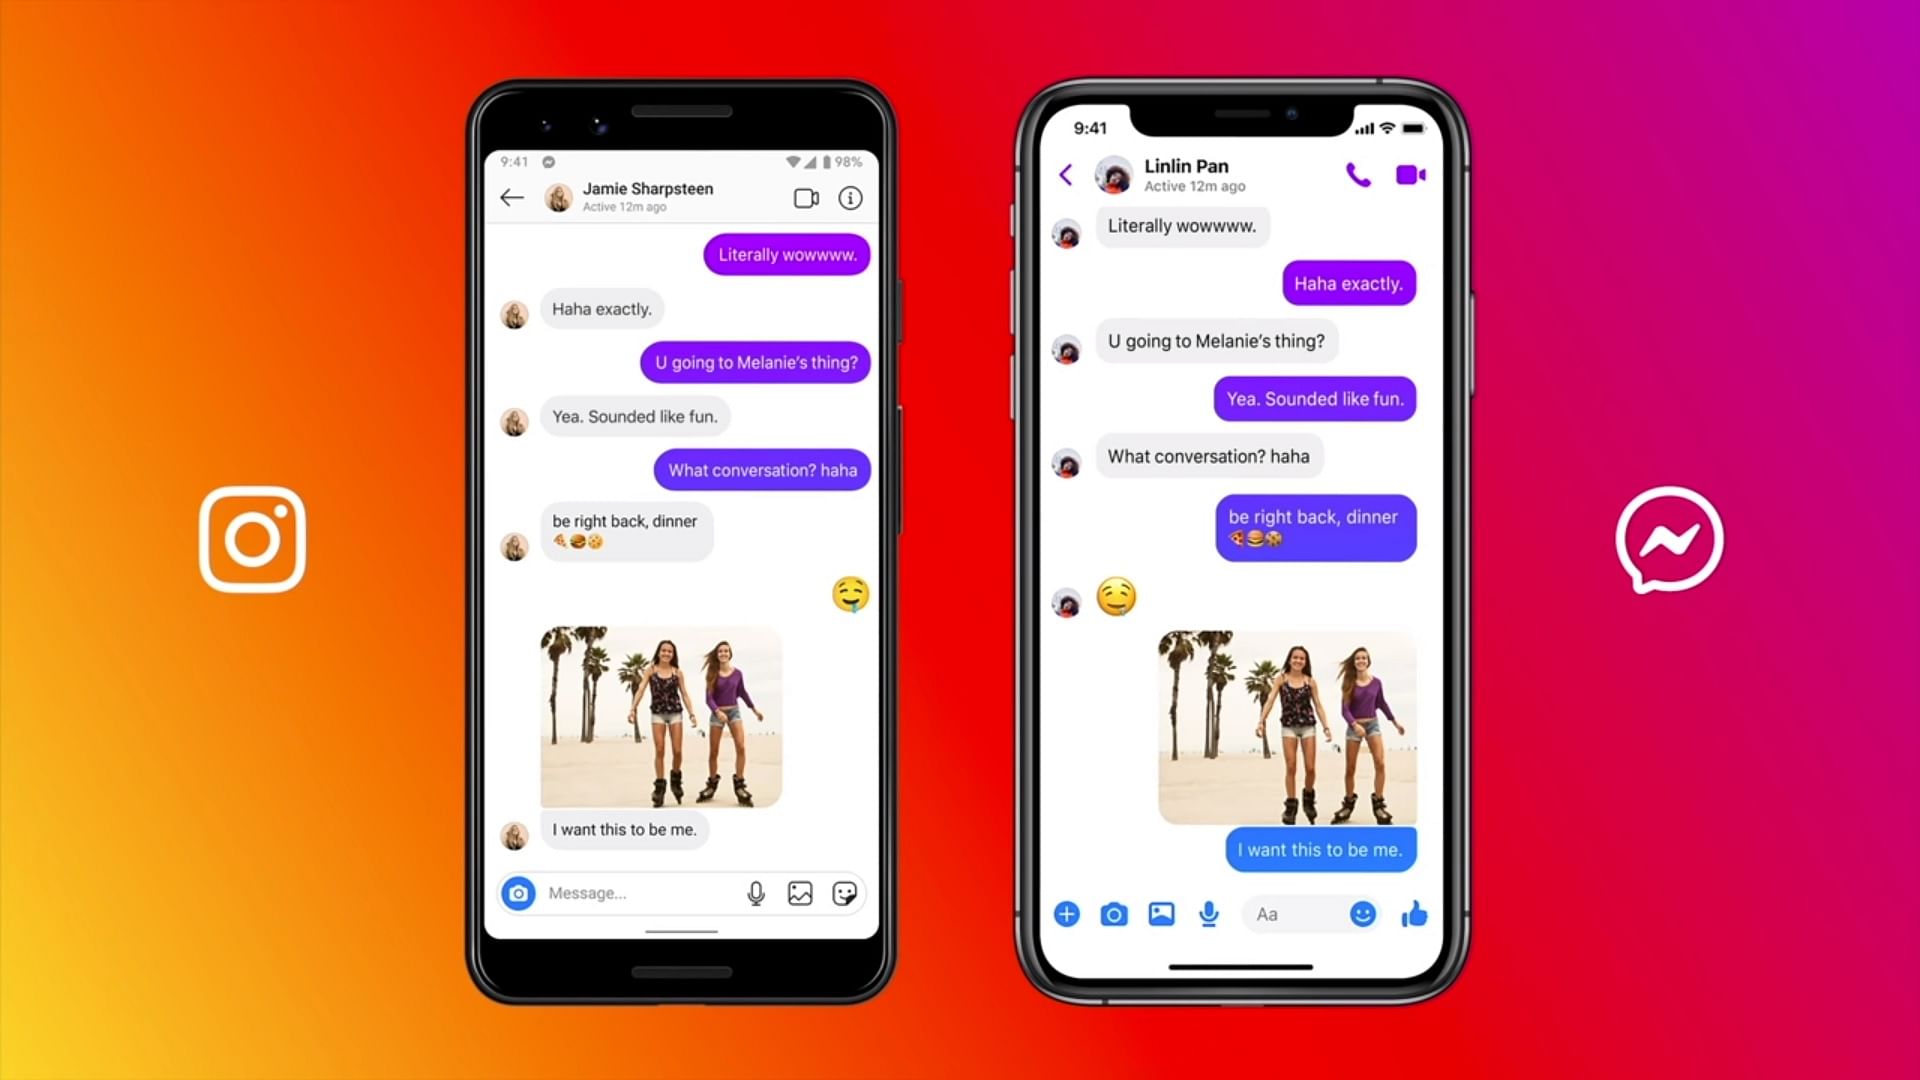 Facebook has introduced cross-platform messaging for Messenger and Instagram.